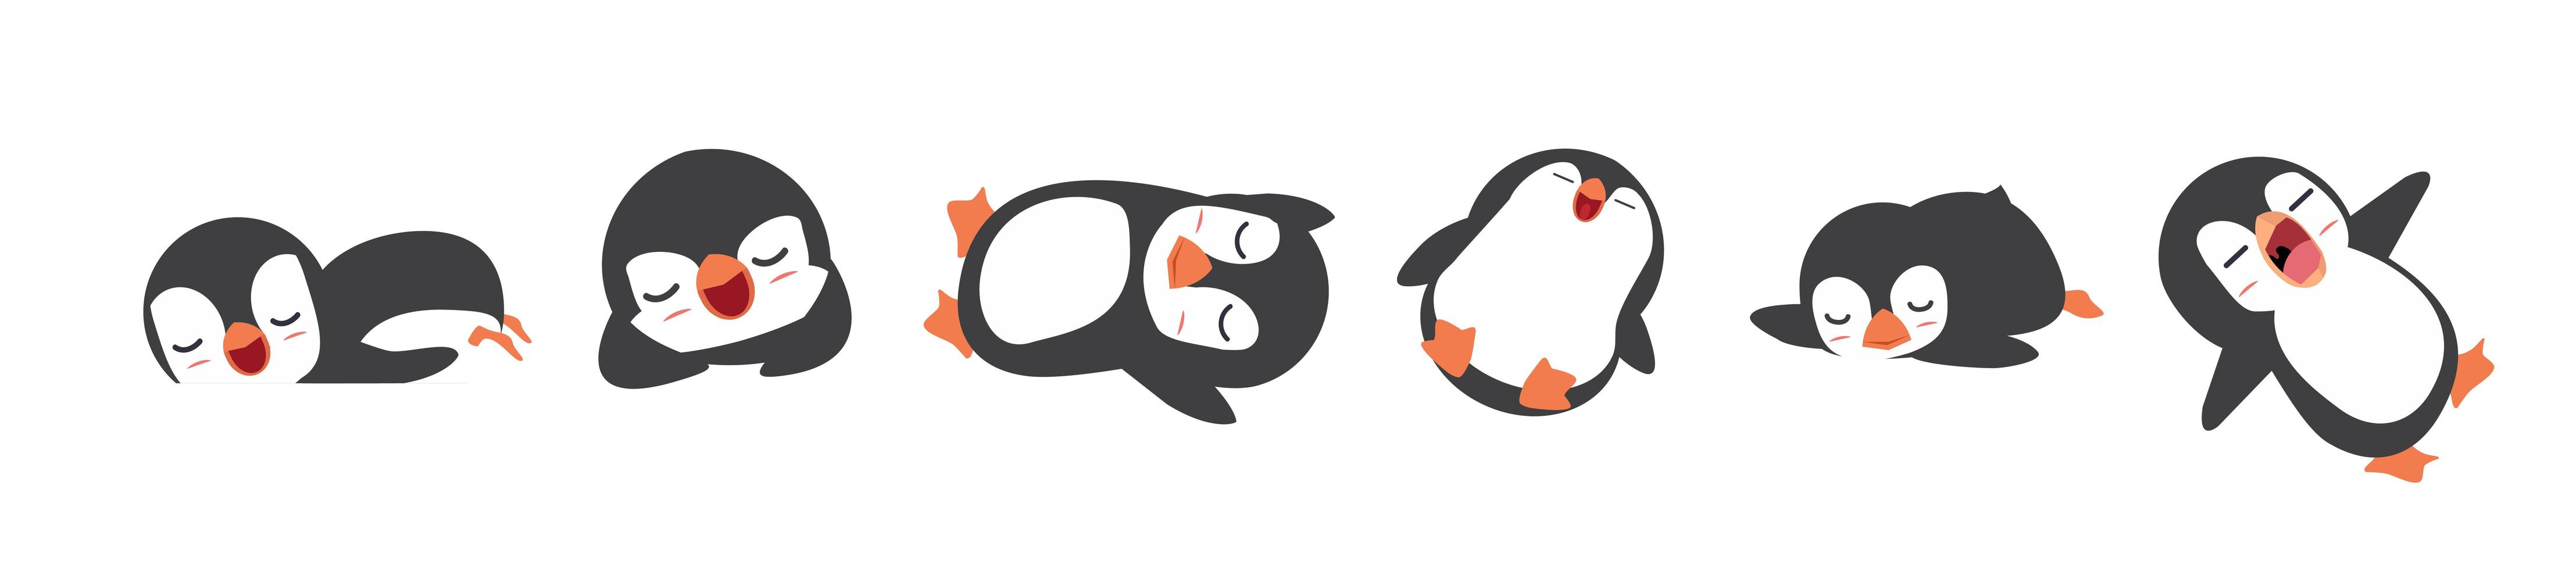 Sleepy penguins cartoon set vector